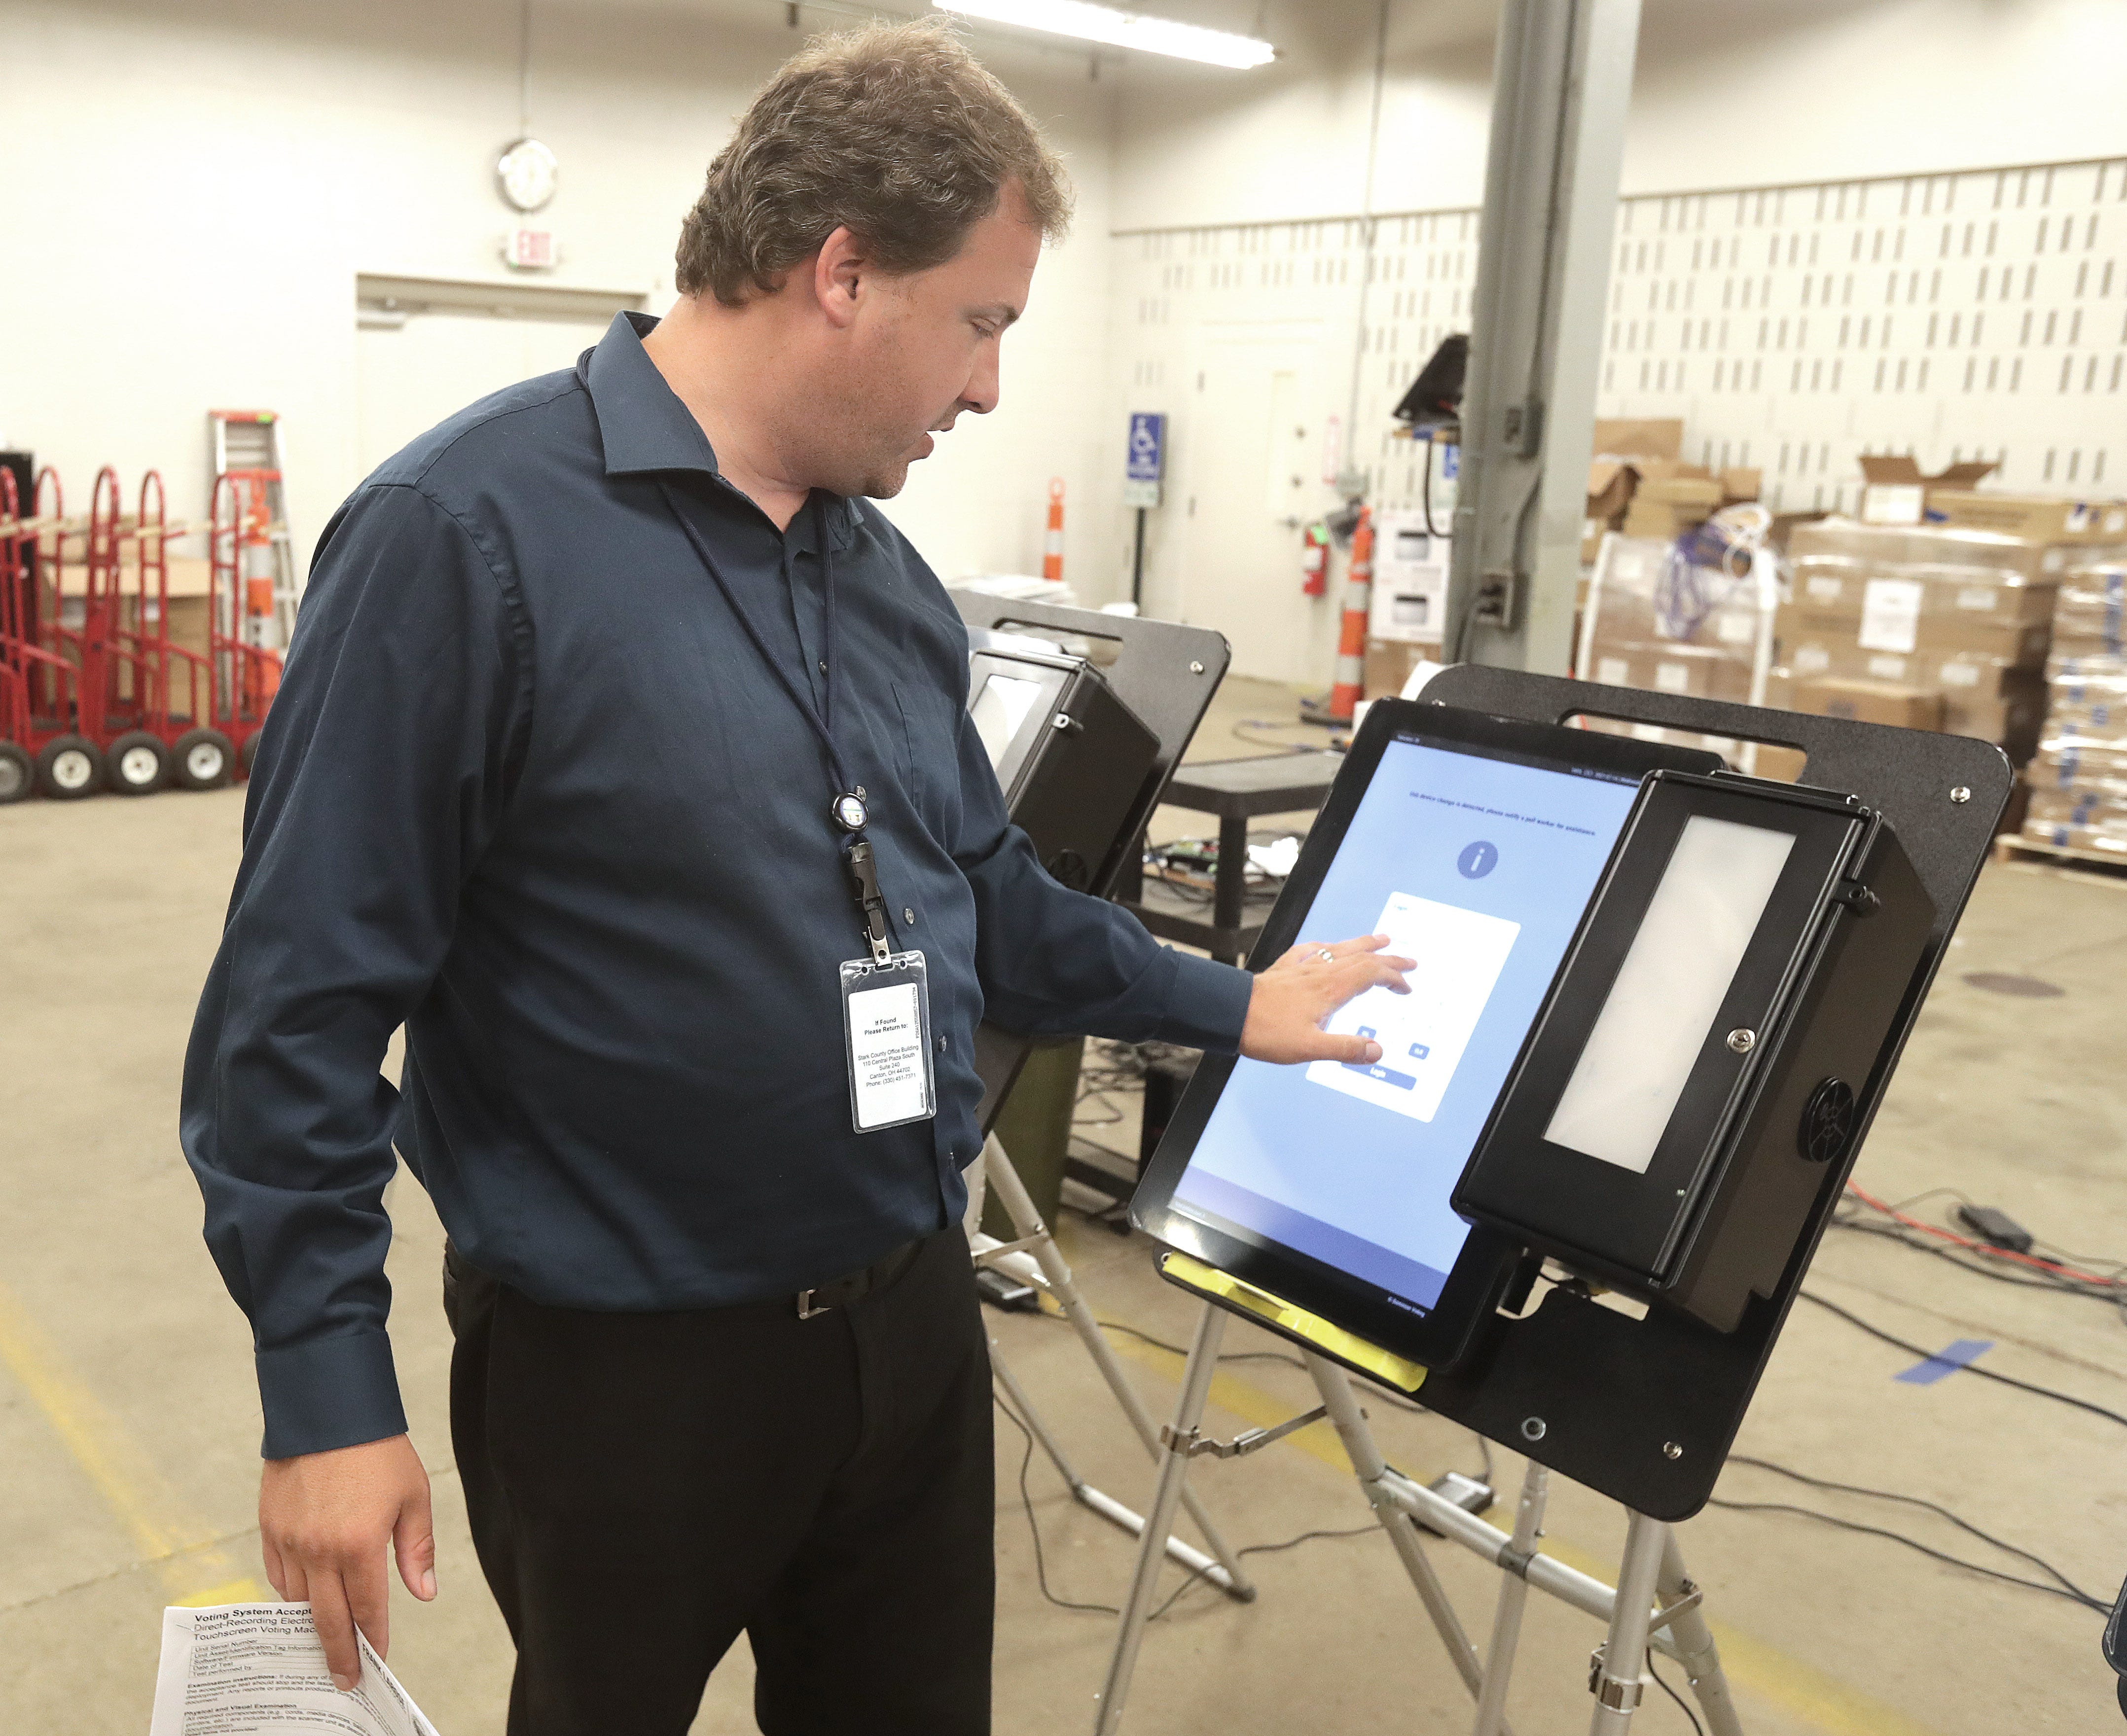 imagecast voting machine face up